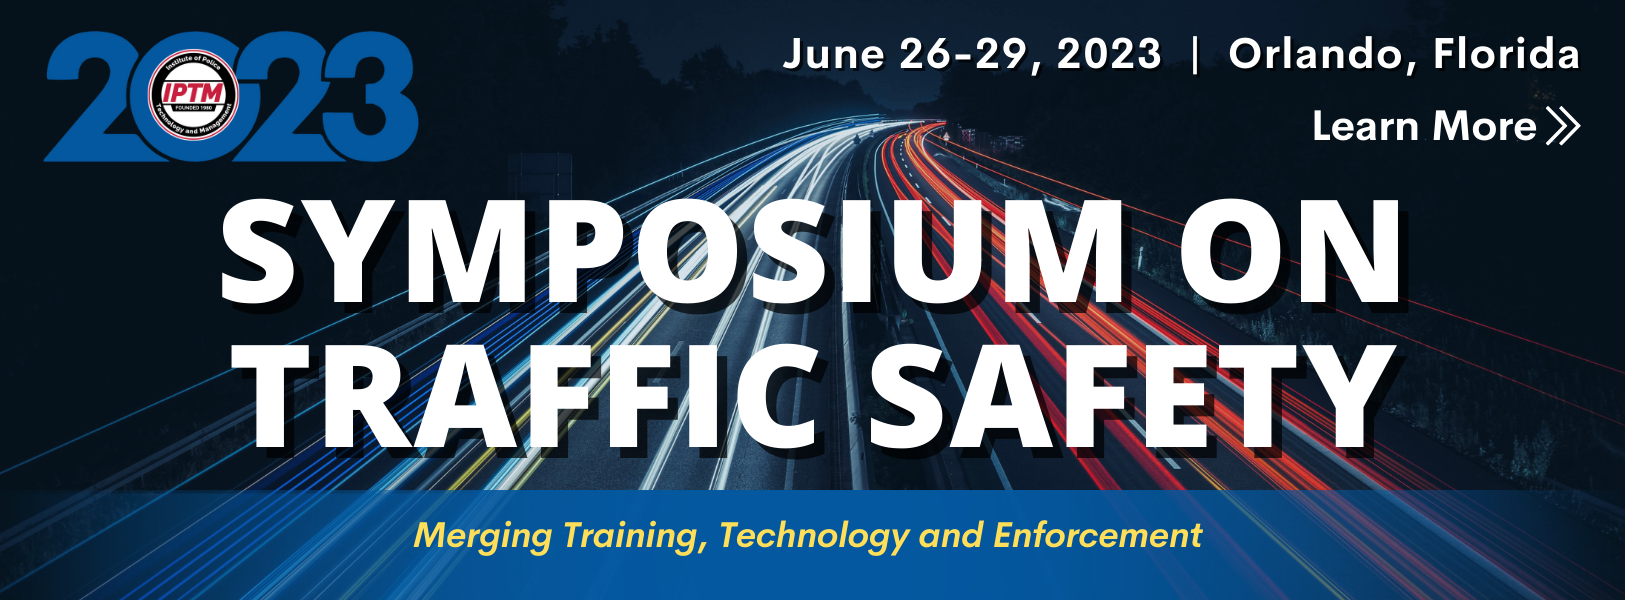 2023 Symposium on Traffic Safety (June  26-29, 2023 in Orlando, Florida)